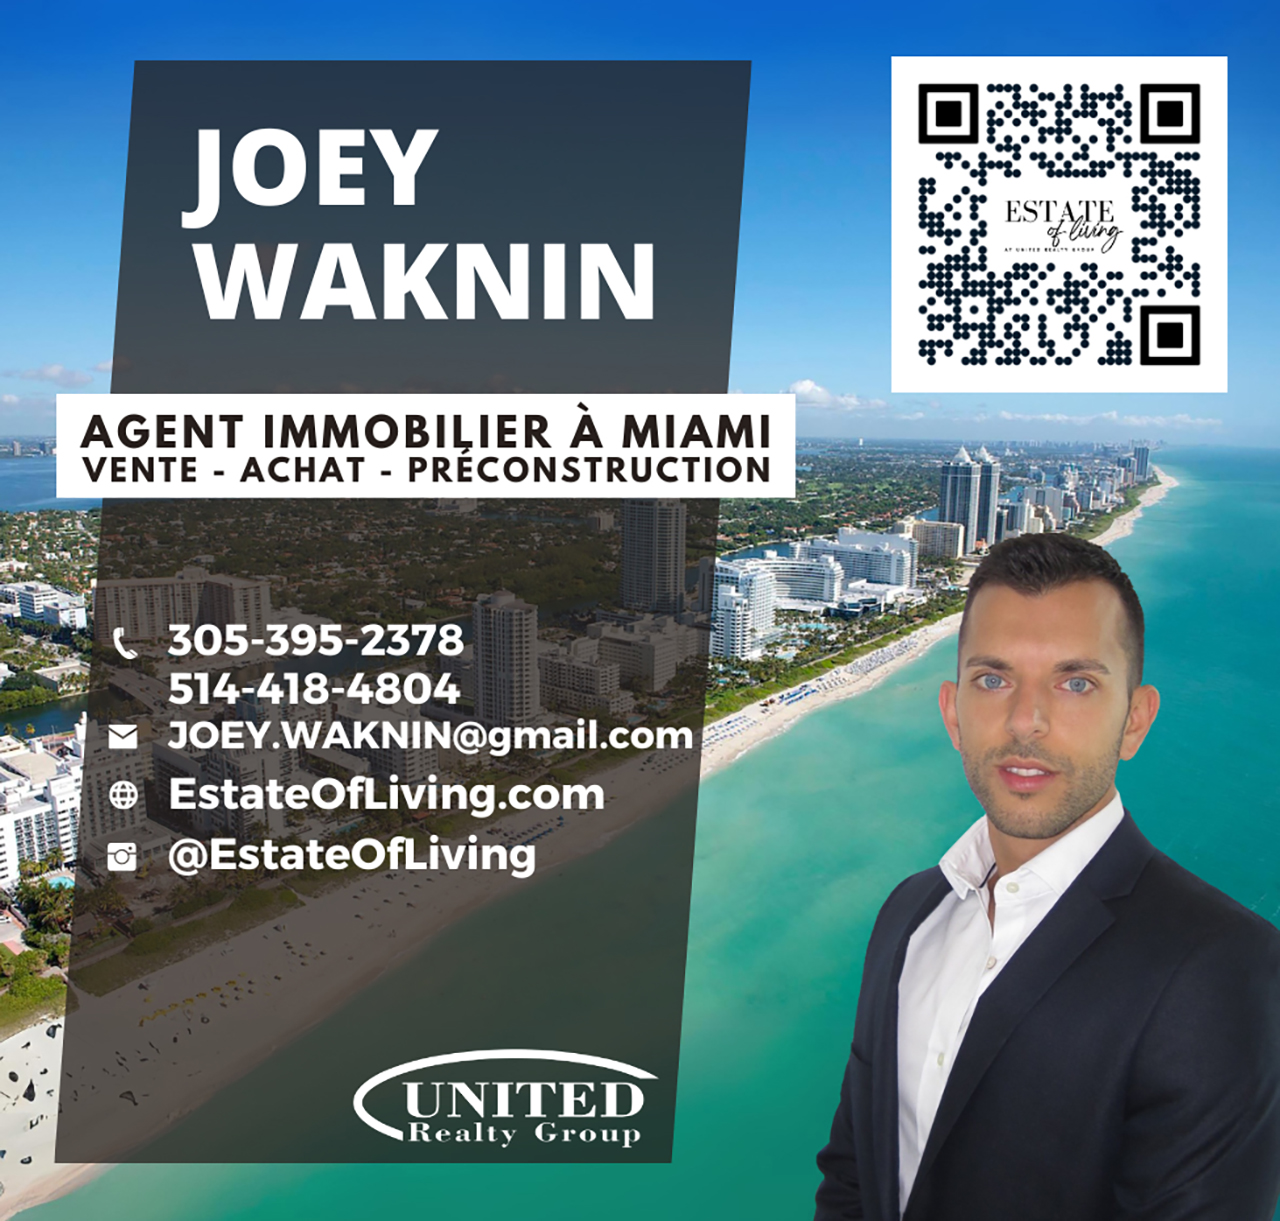 Joey Waknin, agent immobilier à Miami